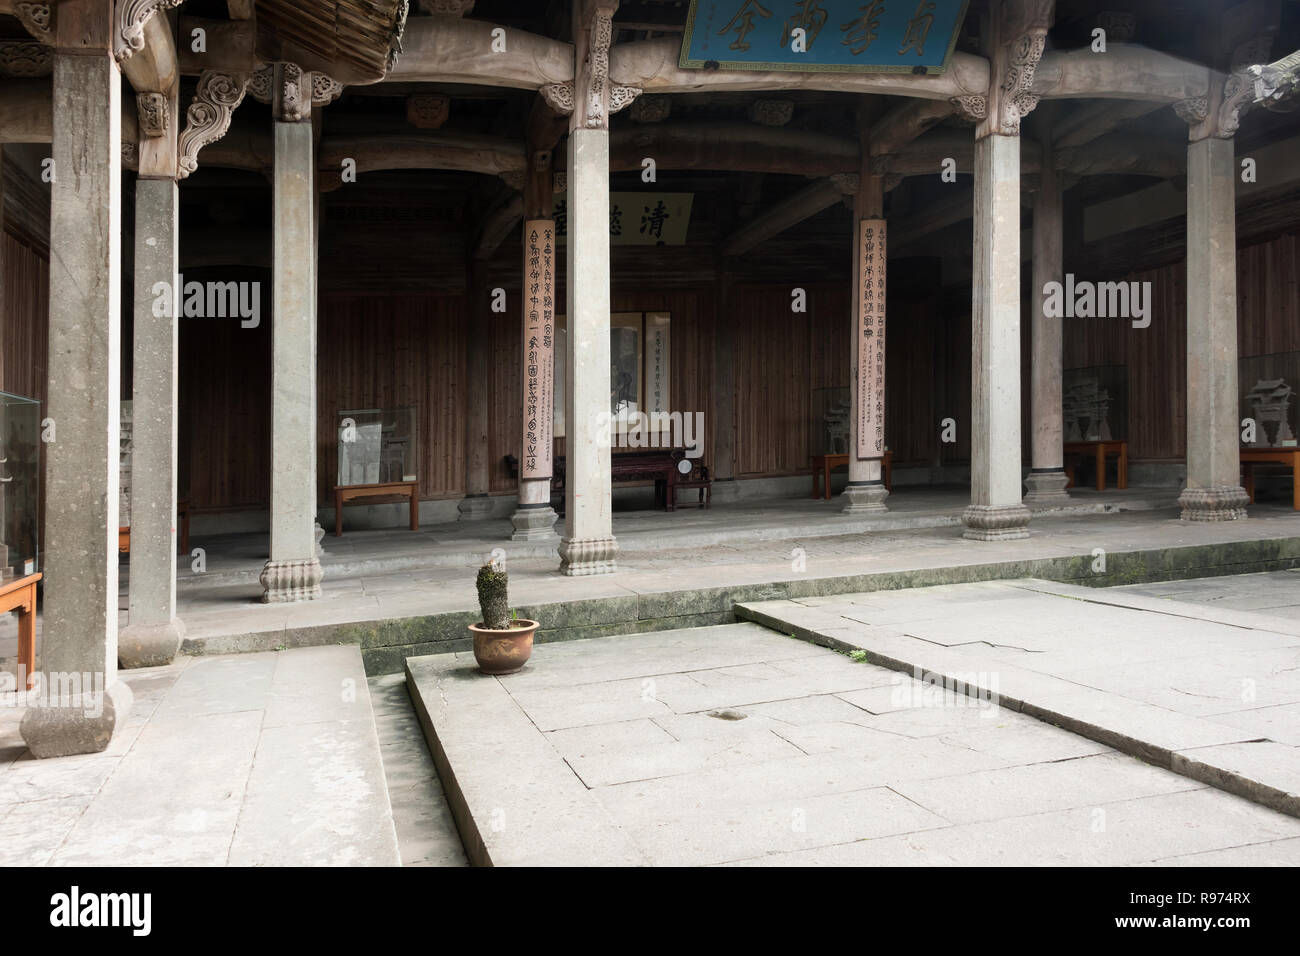 Qing Yi Tang (Ancestral Hall for Women), Huizhou Ancient City, Tangyue, China Stock Photo